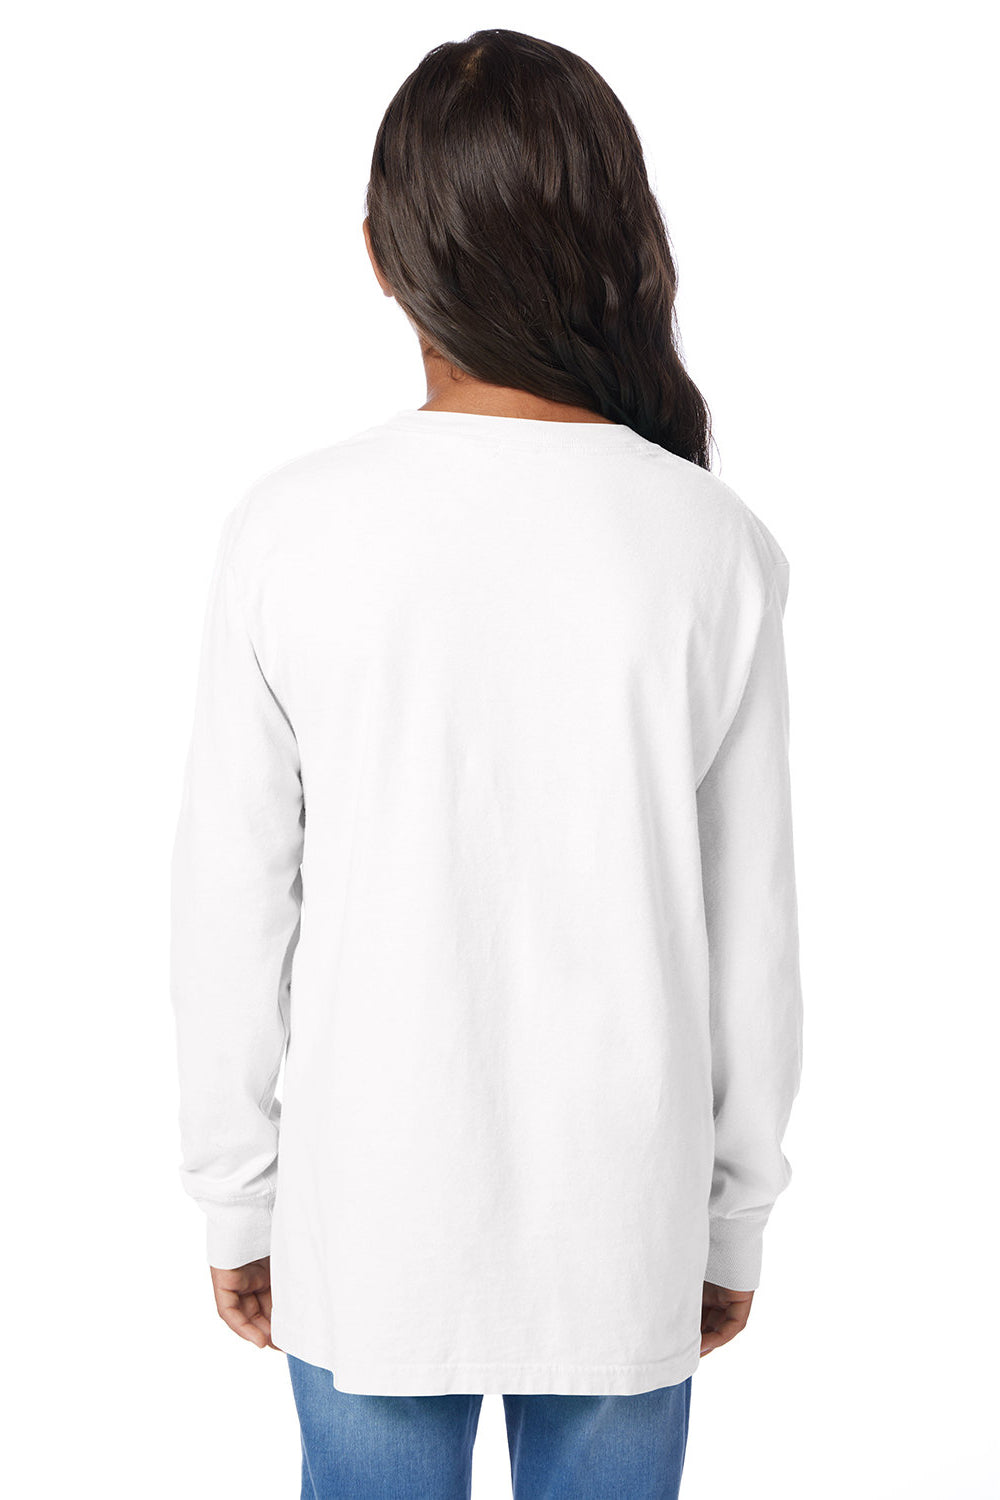 ComfortWash By Hanes GDH275 Youth Garment Dyed Long Sleeve Crewneck T-Shirt White Model Back